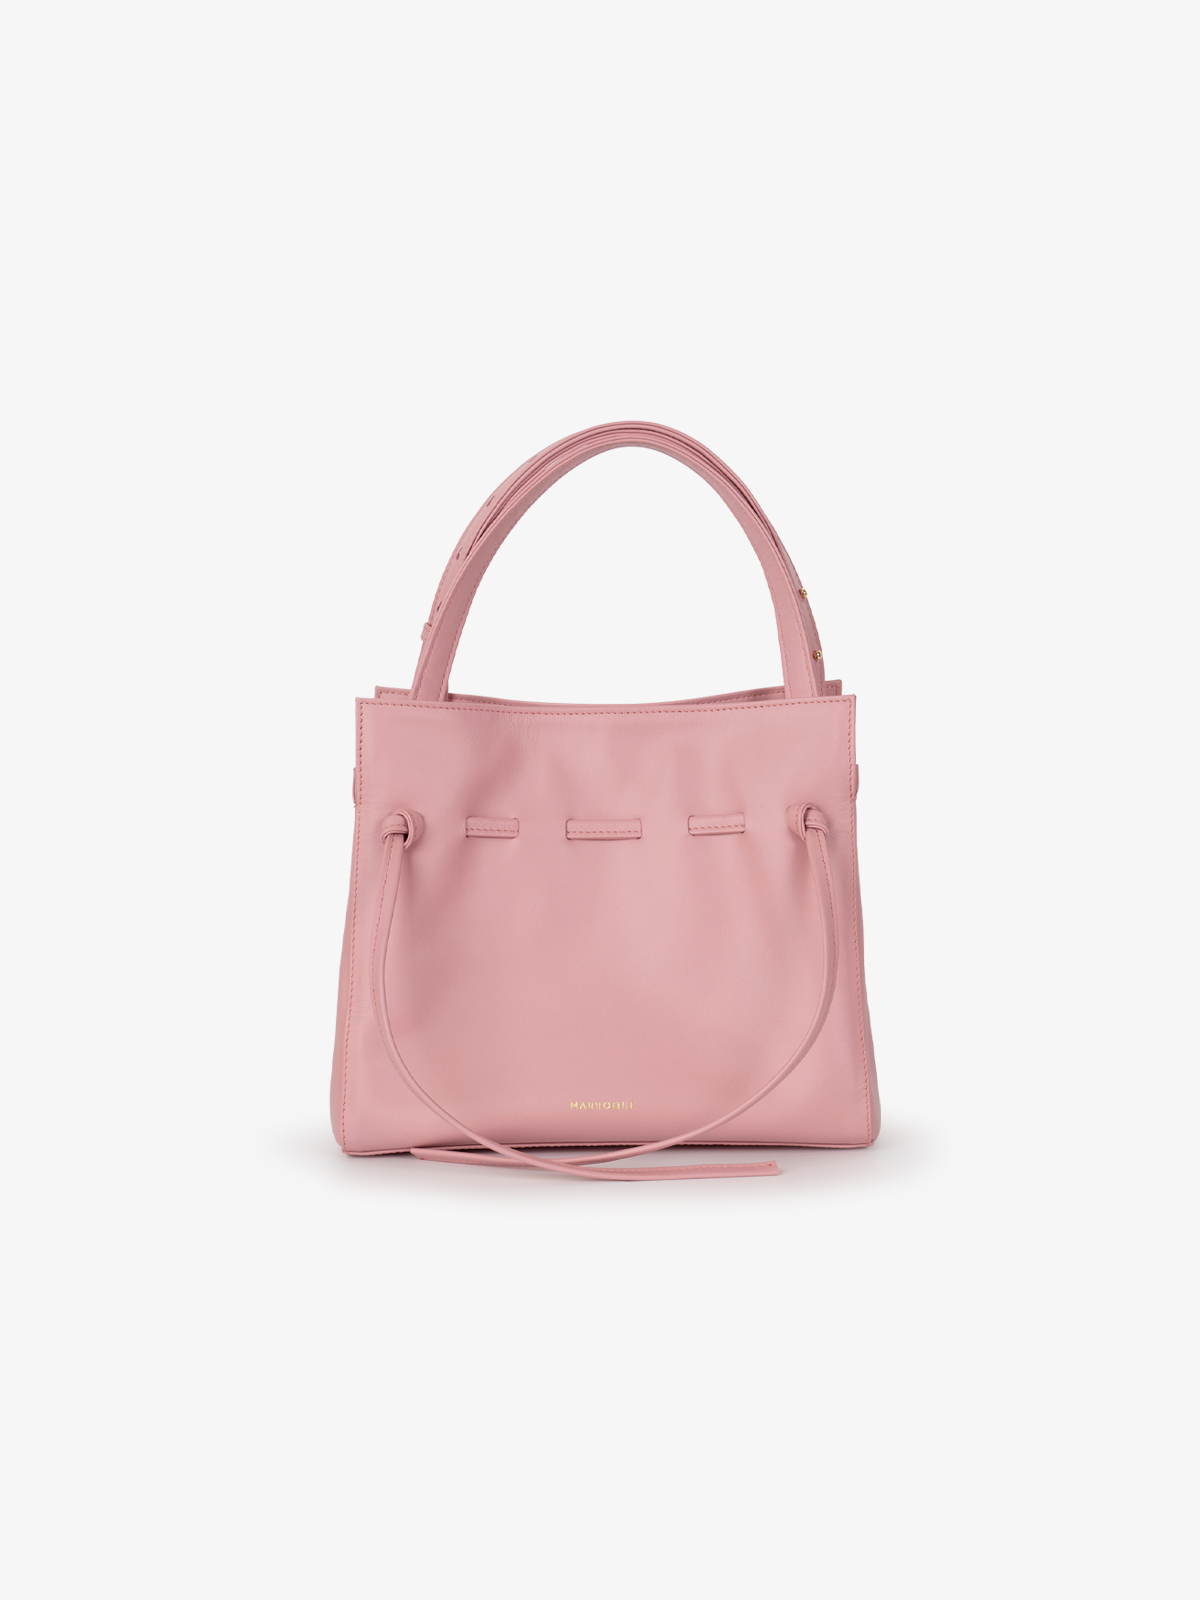 Marroque wendy 25 tote bag in flamingo. Genuine leather bag. Shoulder bag crossbody bag.